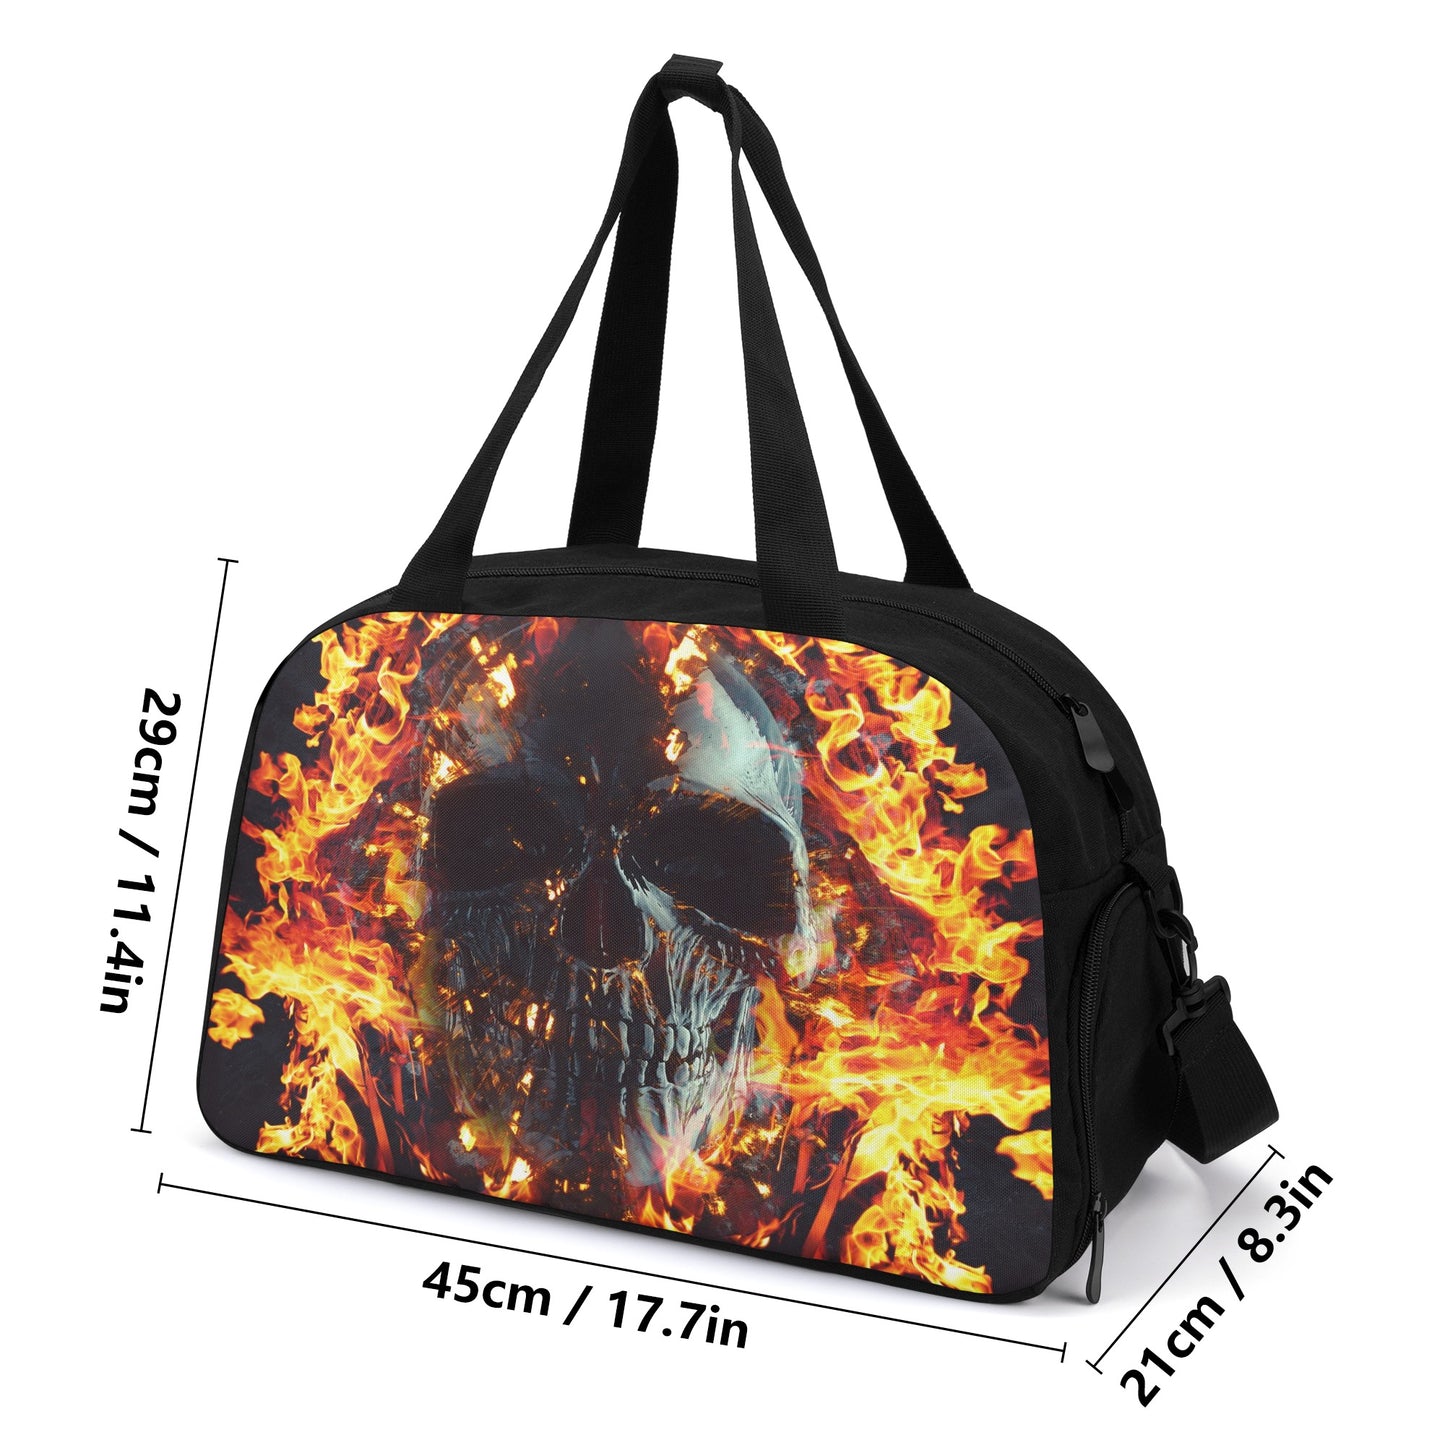 Flaming skull gothic Halloween travel bag Travel Luggage Bag